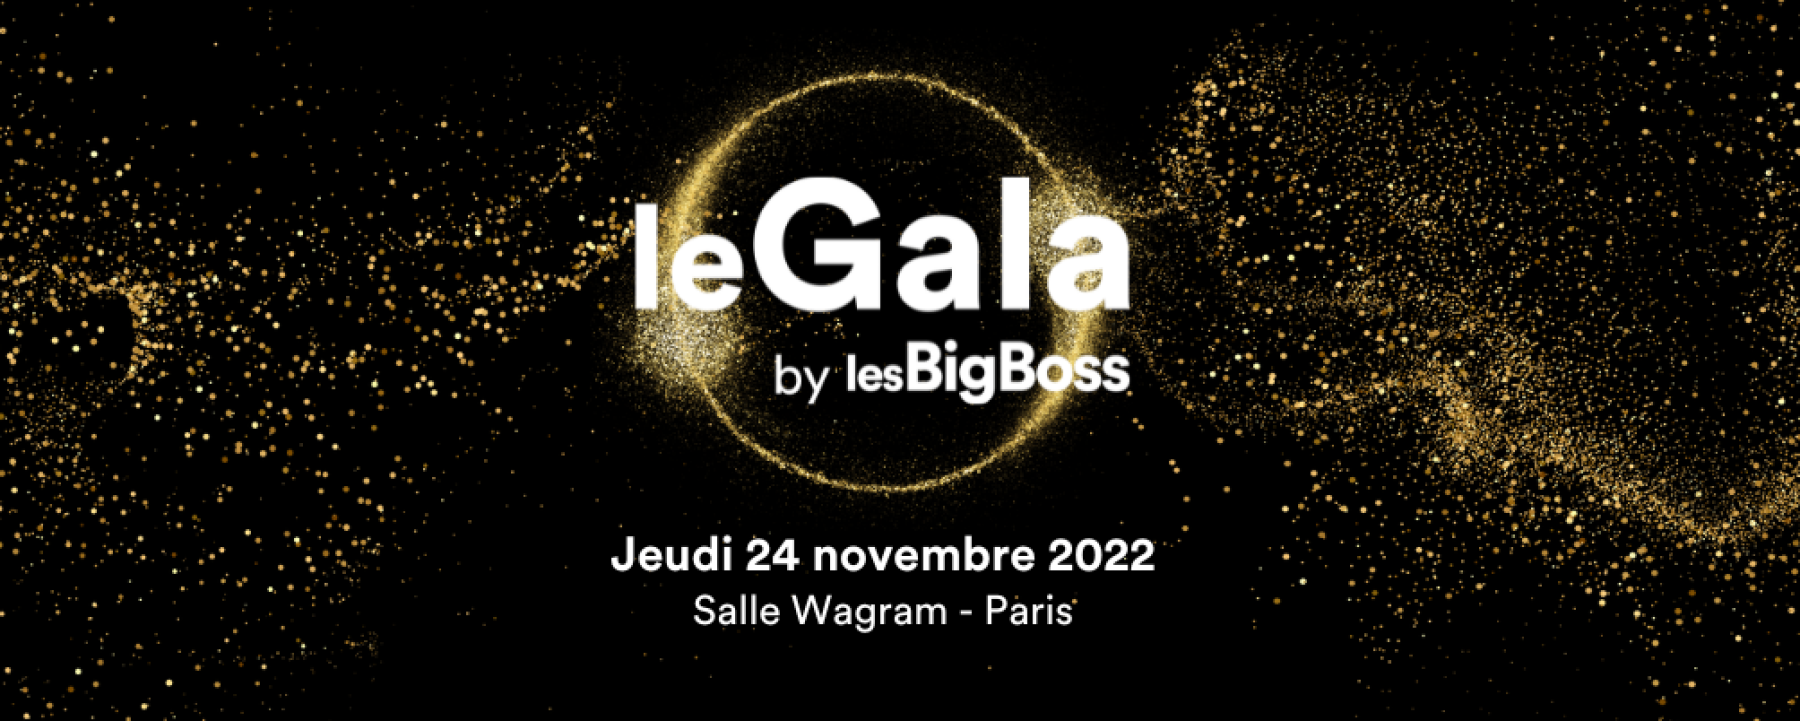 leGala 2022 by les BigBoss